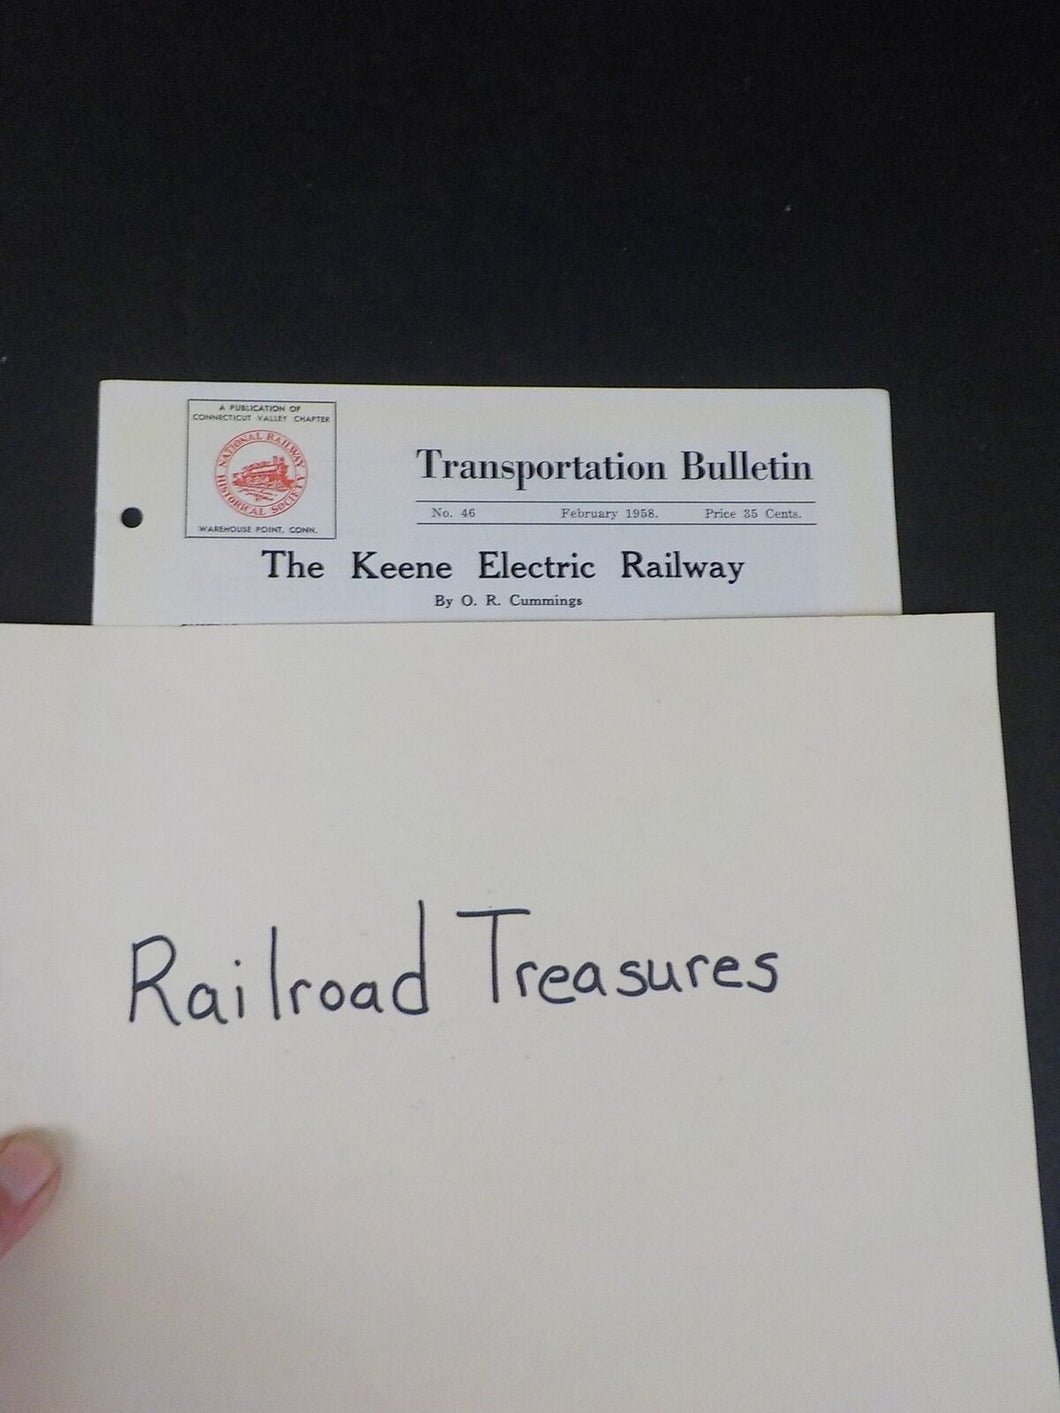 Transportation Bulletin #46 The Keene Electric Railway